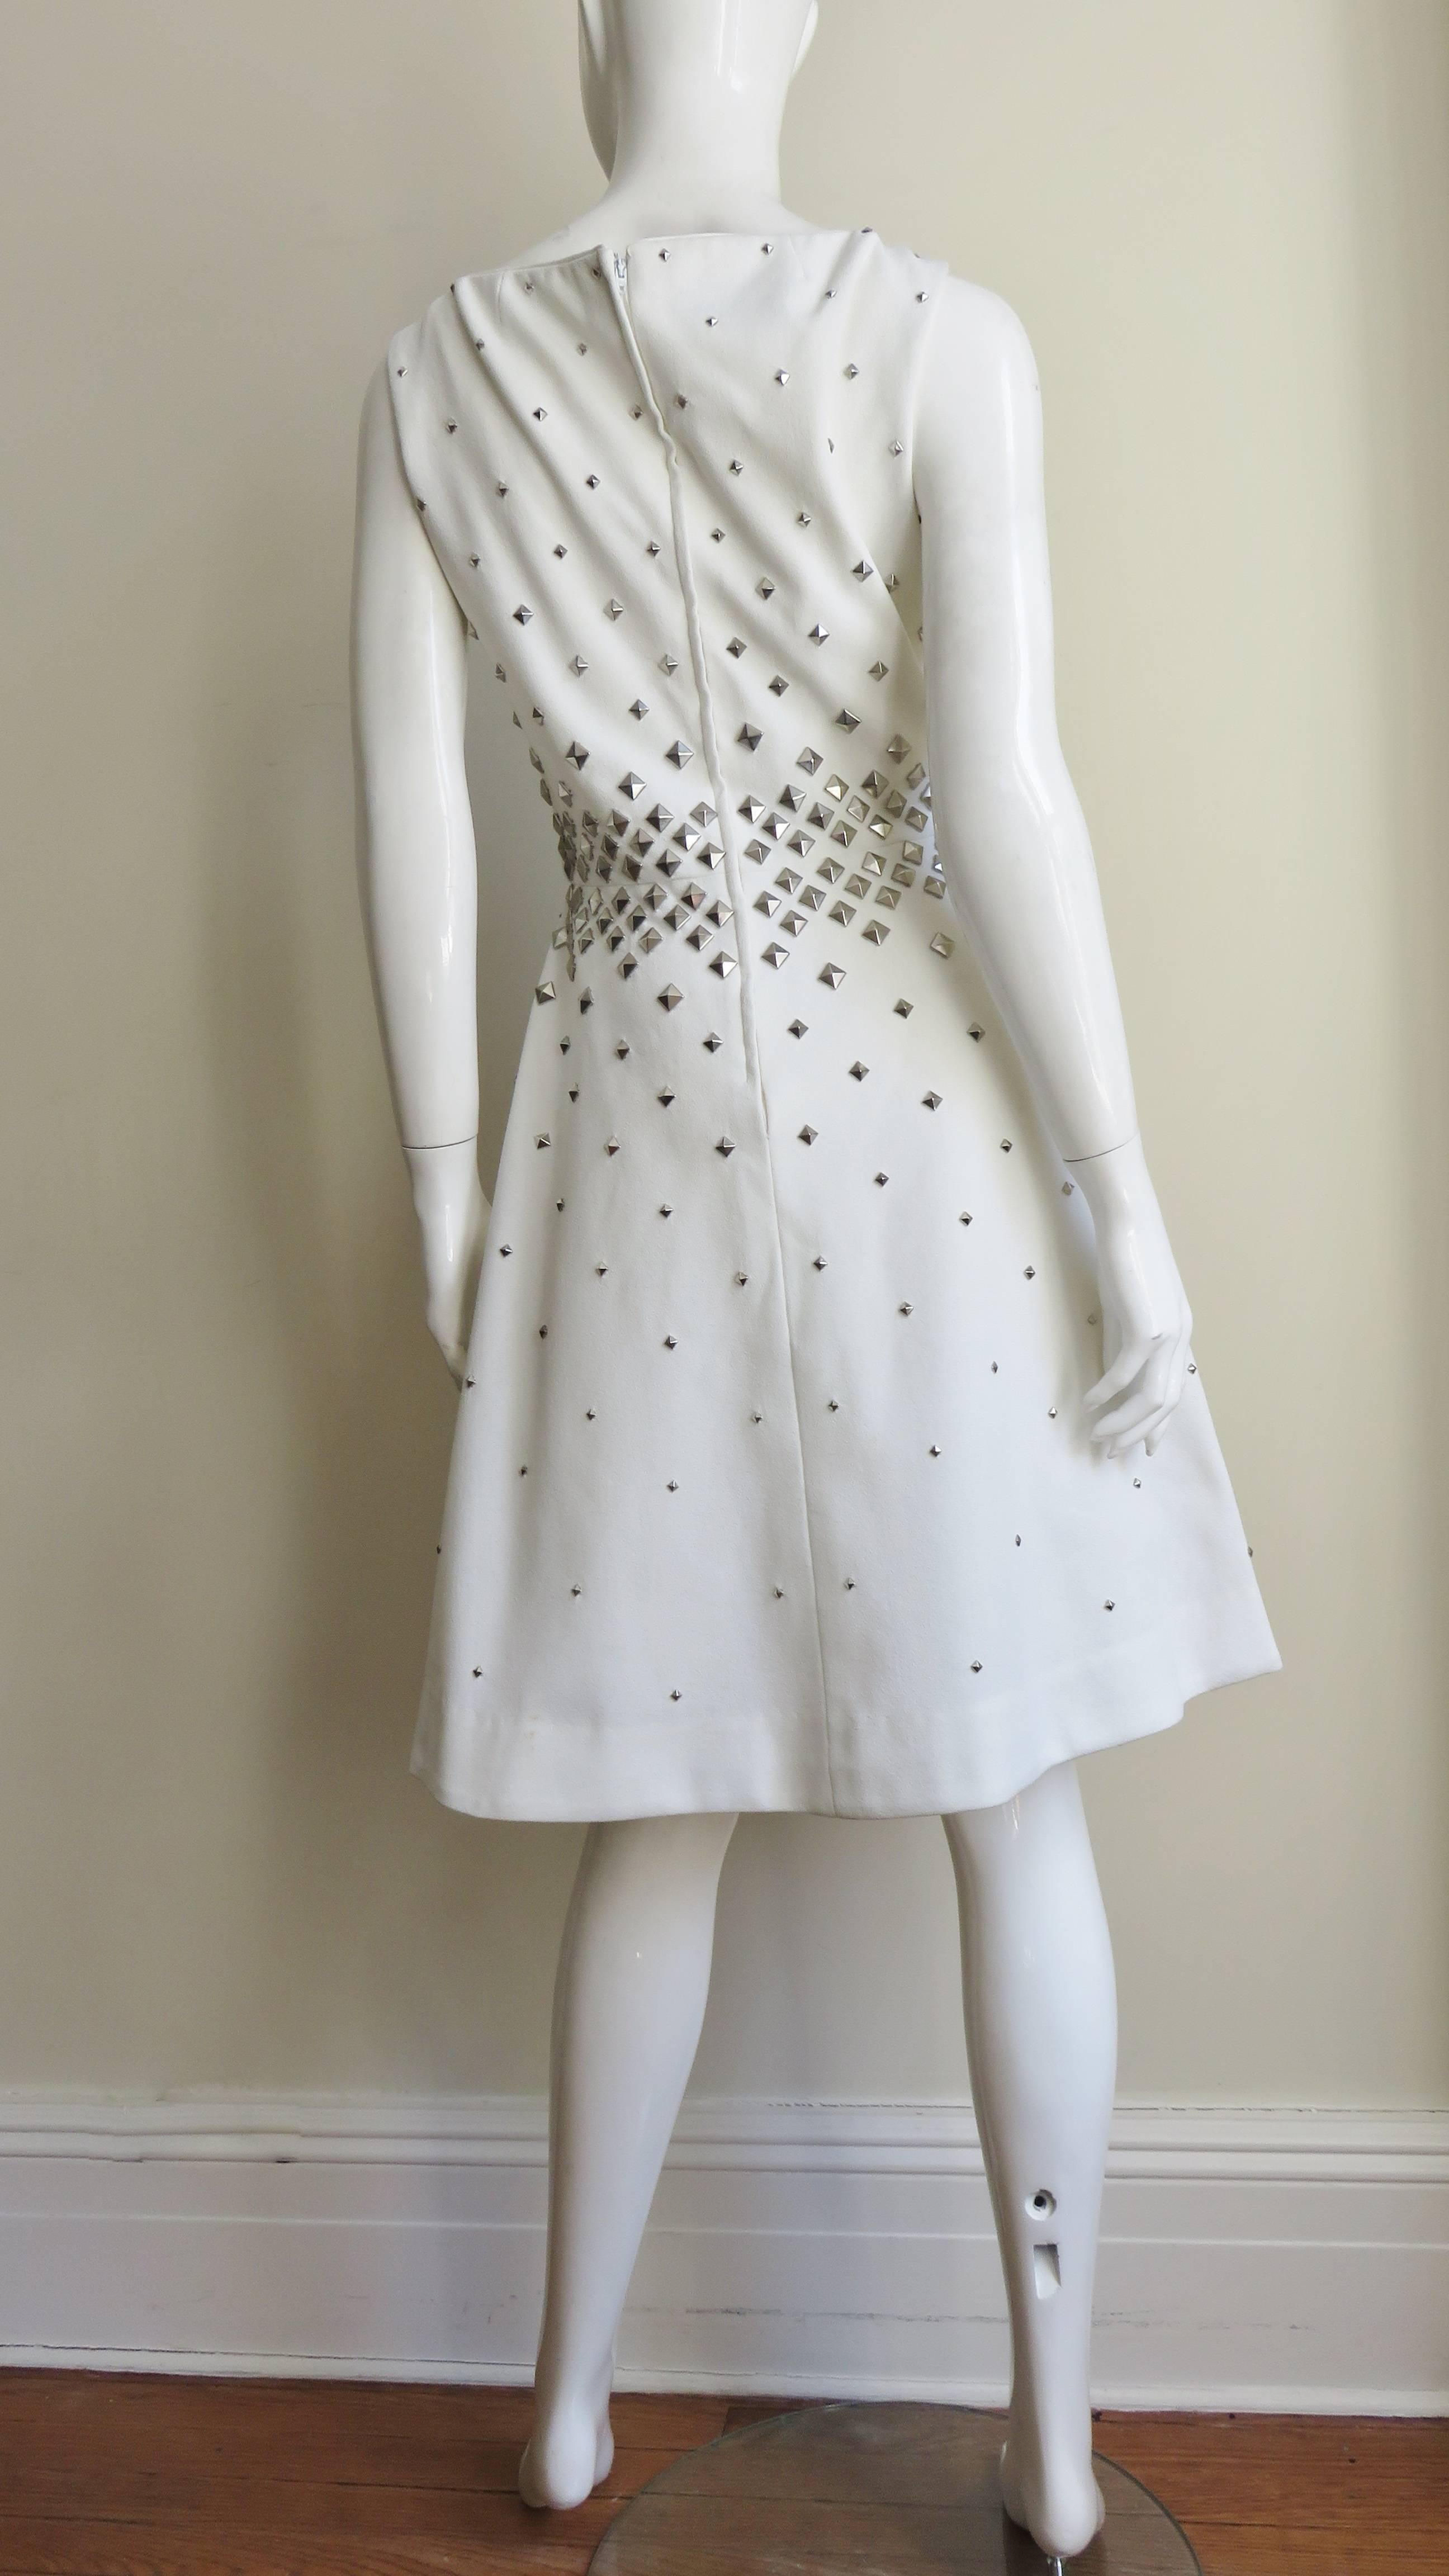  Sydney North Dress with Studs 1960s 5